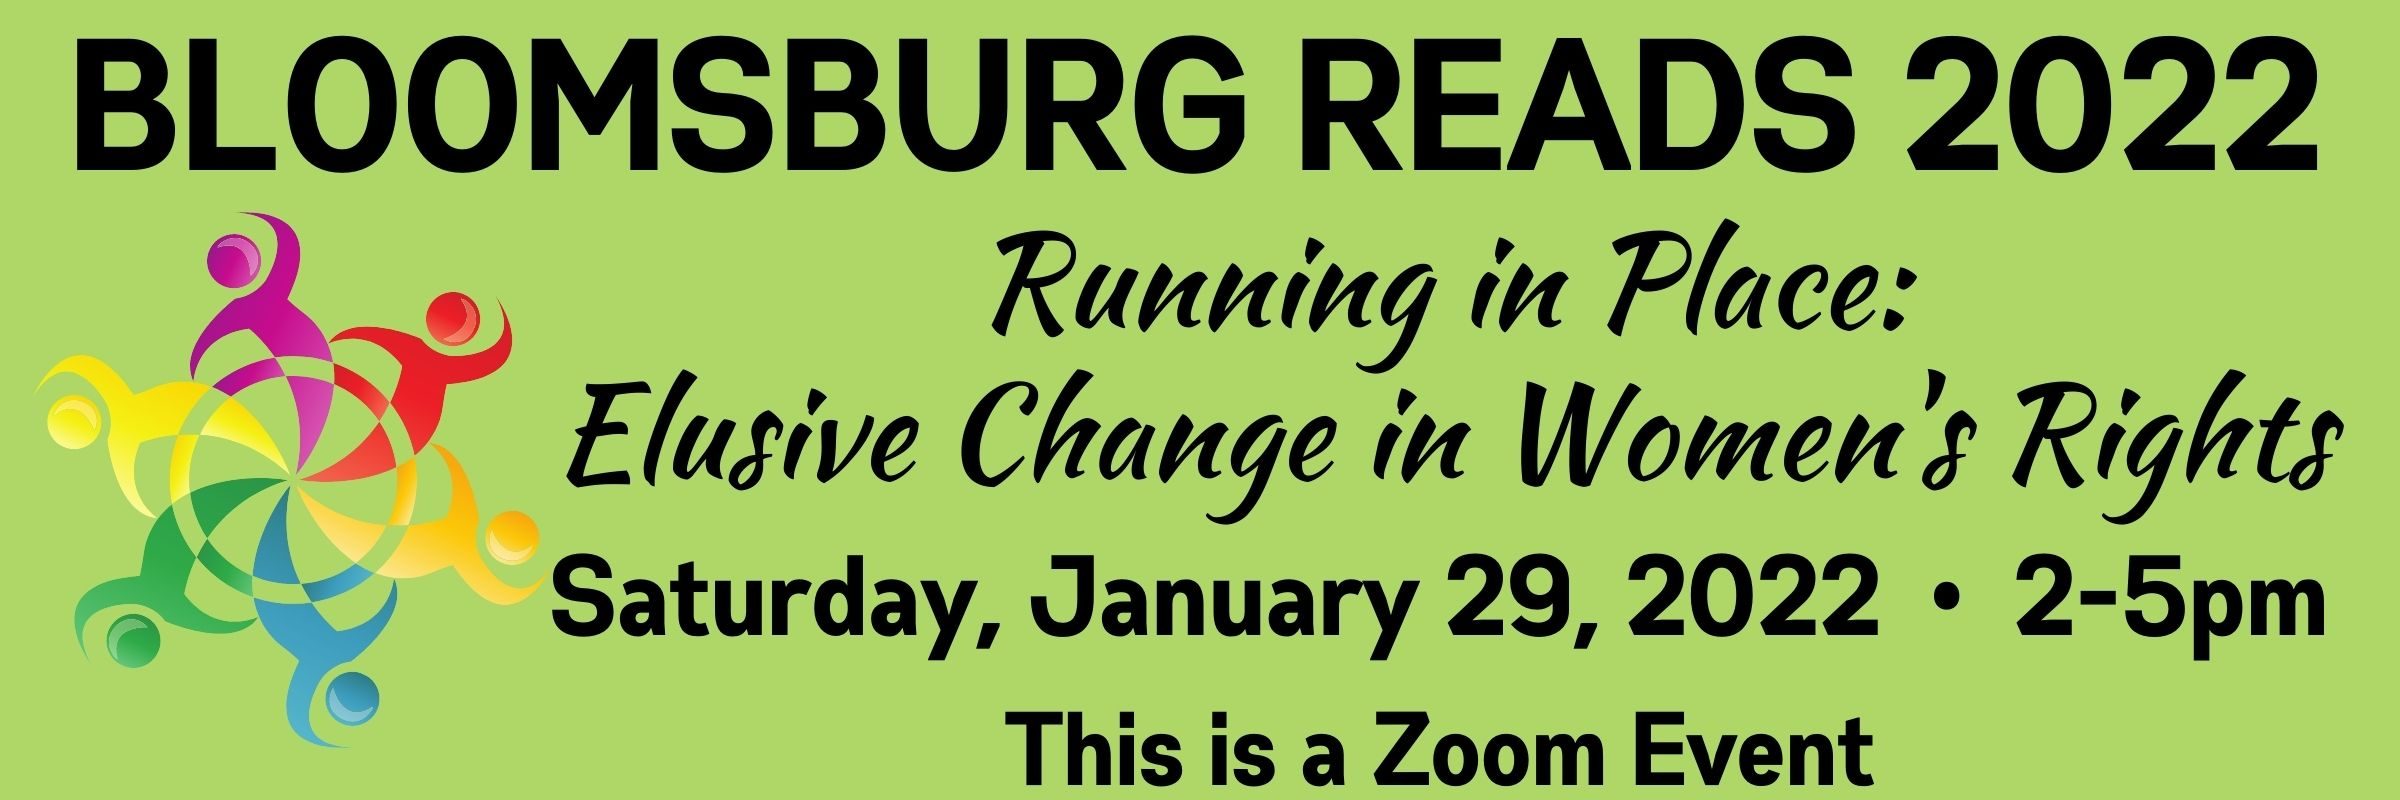 Bloomsburg Reads 2022 narrow web banner